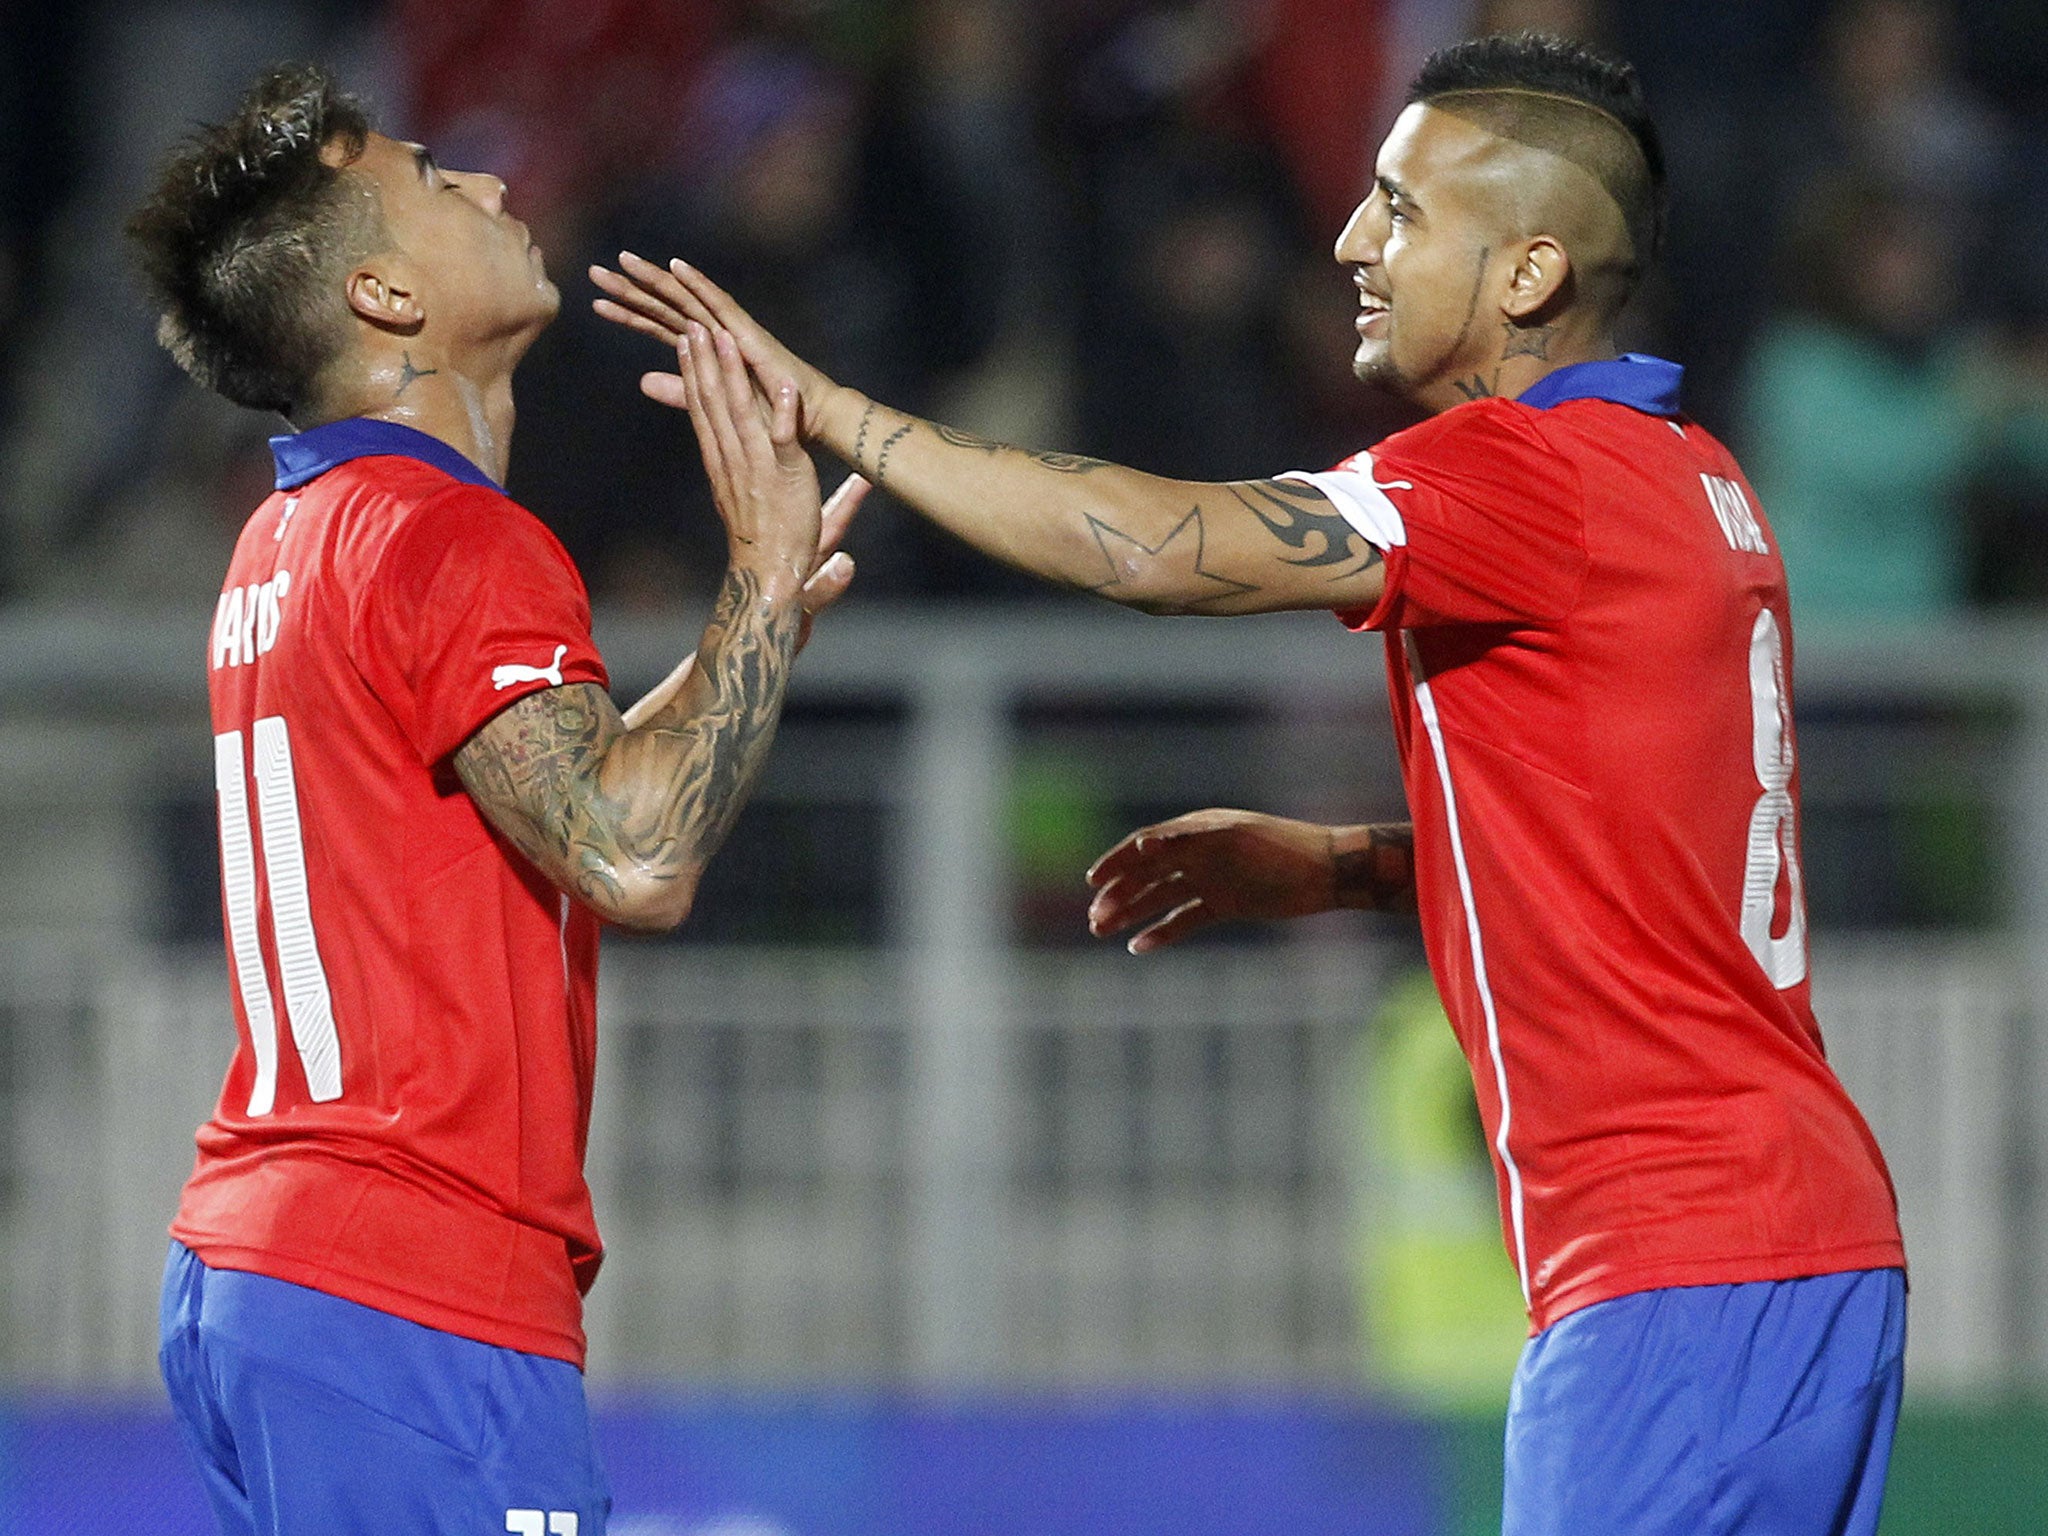 Chilean national team footballer Eduardo Vargas (L) celebrates next to Arturo Vidal after scoring against North Ireland during a friendly football match in Valparaiso